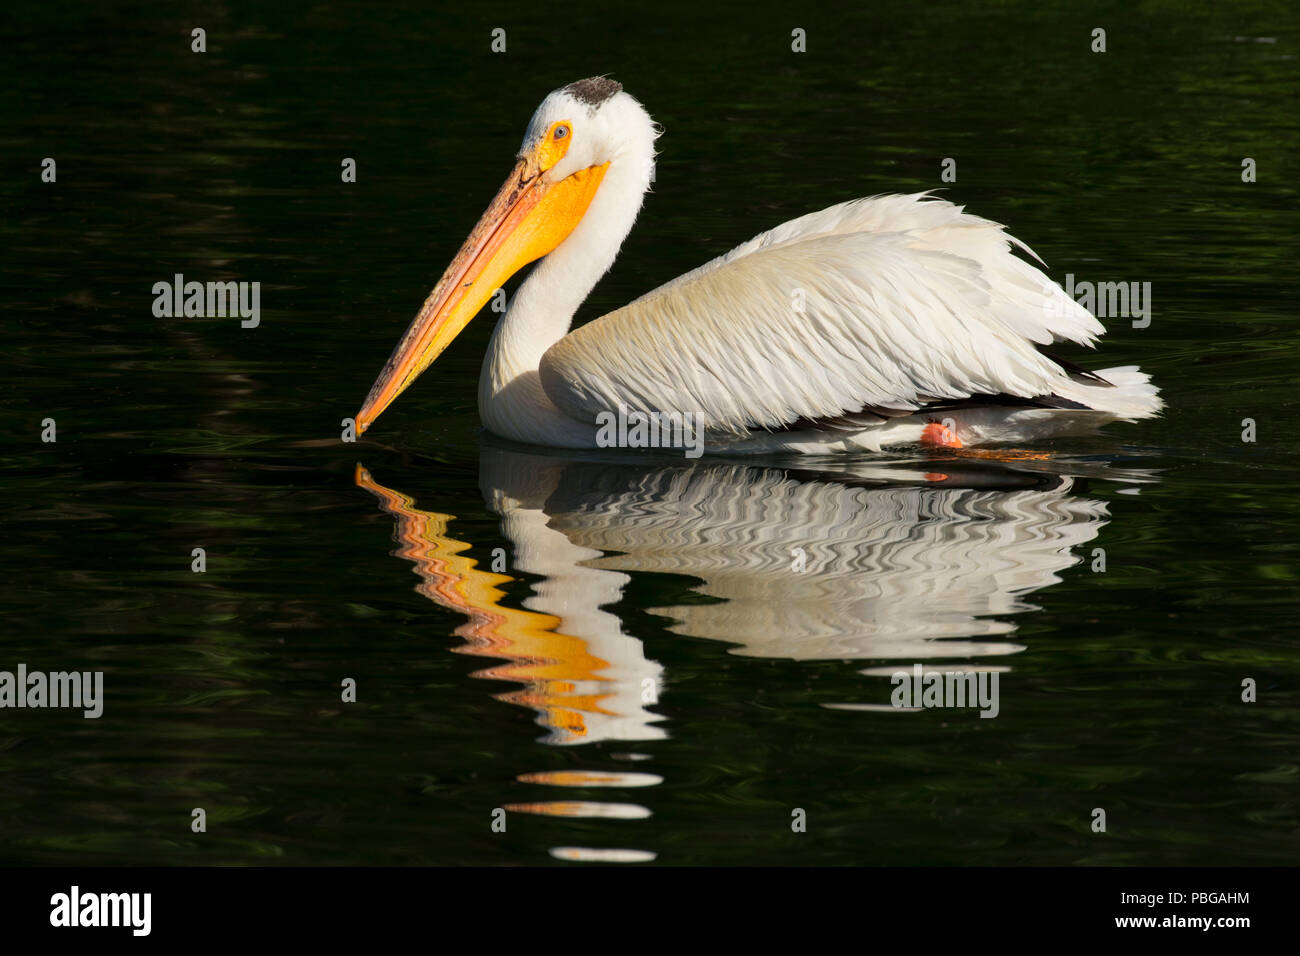 White pelican, Hagerman Wildlife Management Area, Idaho Stock Photo